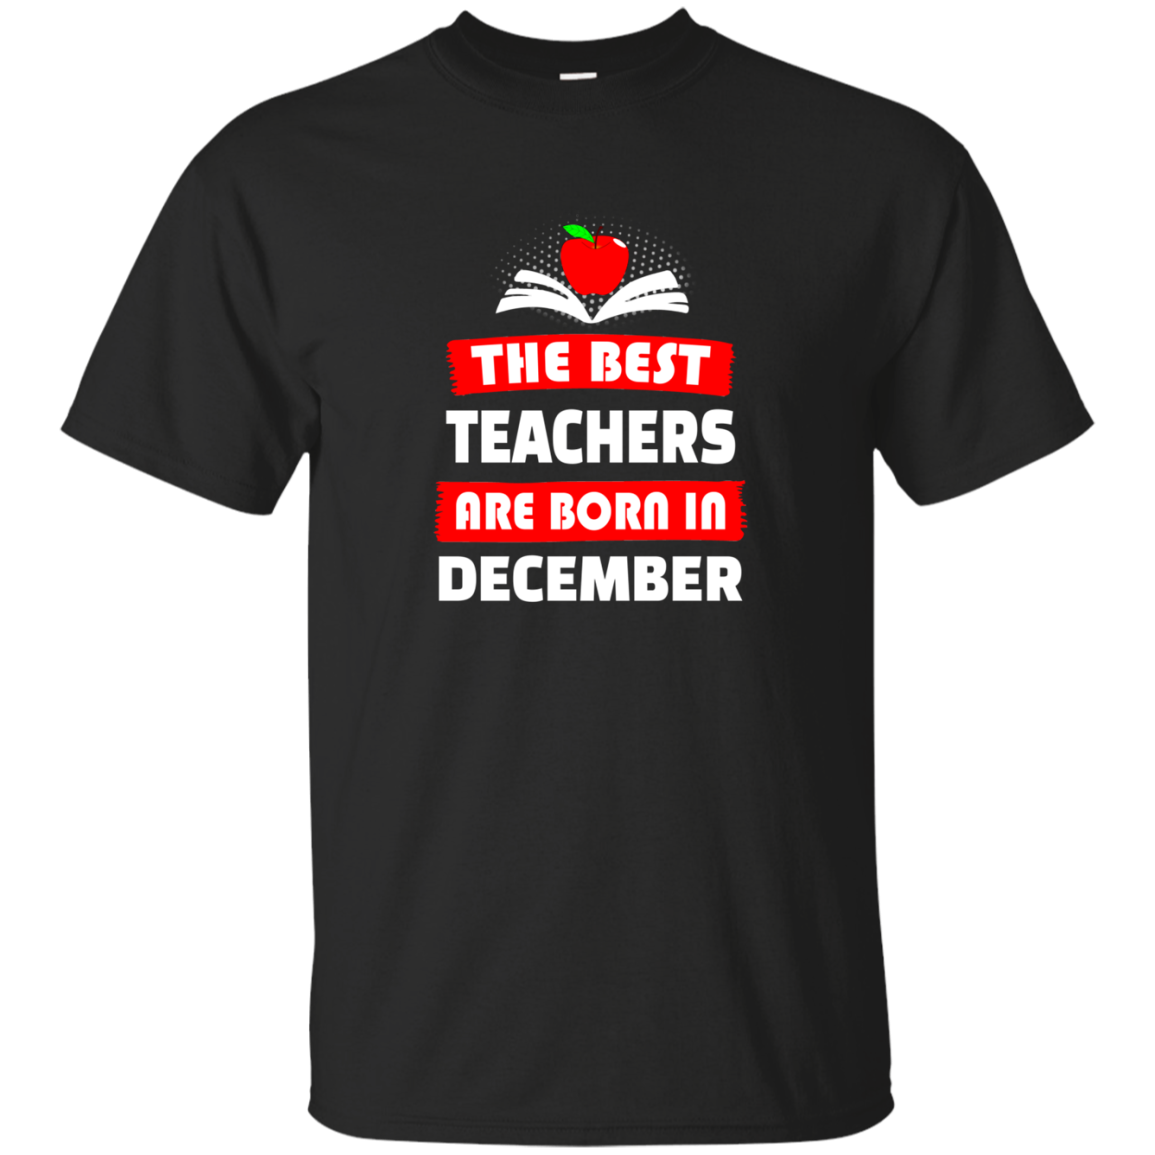 The best teachers are born in December shirt, tank, hoodie